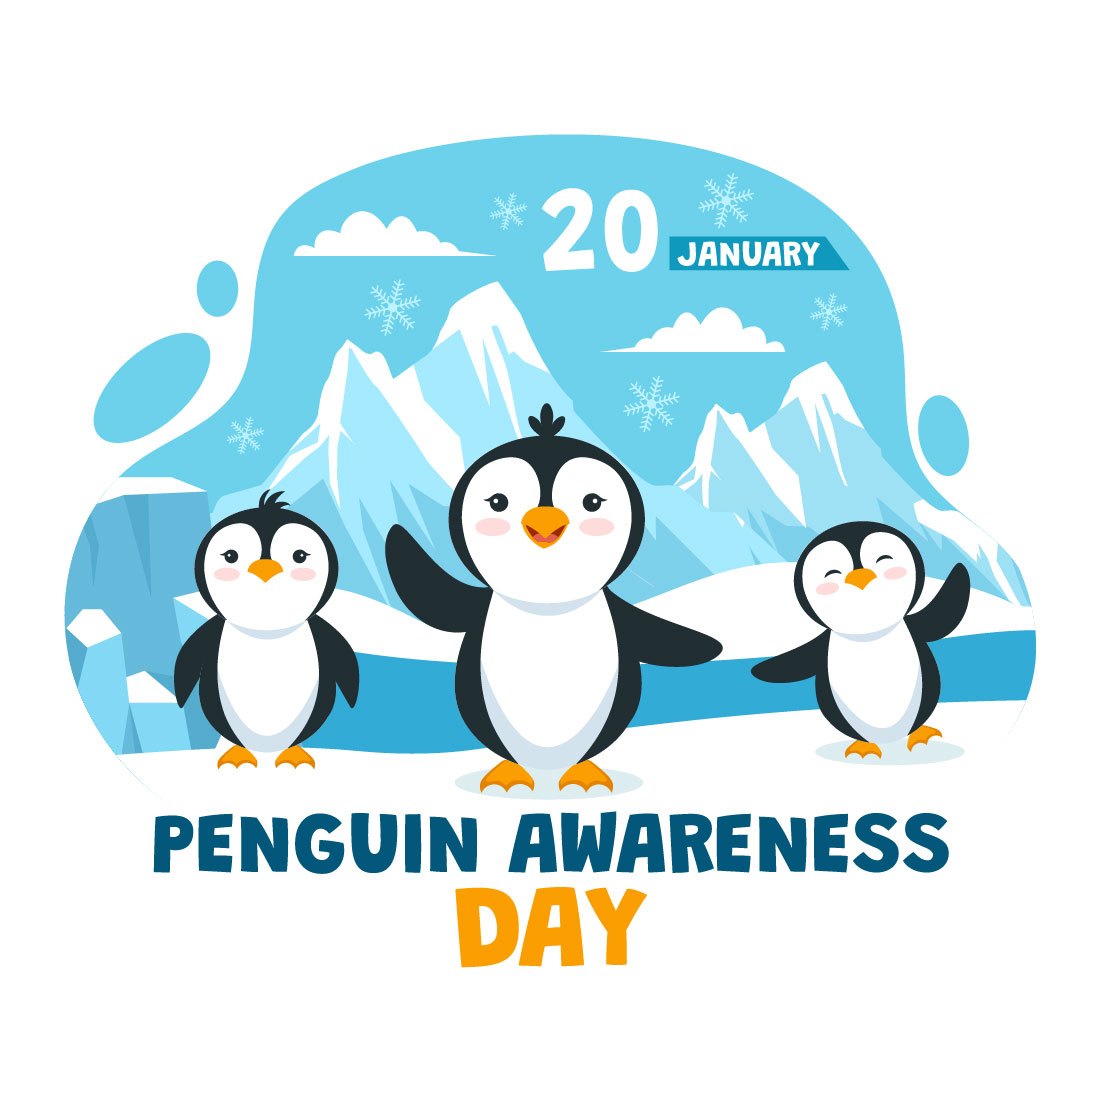 9 Penguin Awareness Day Illustration cover image.